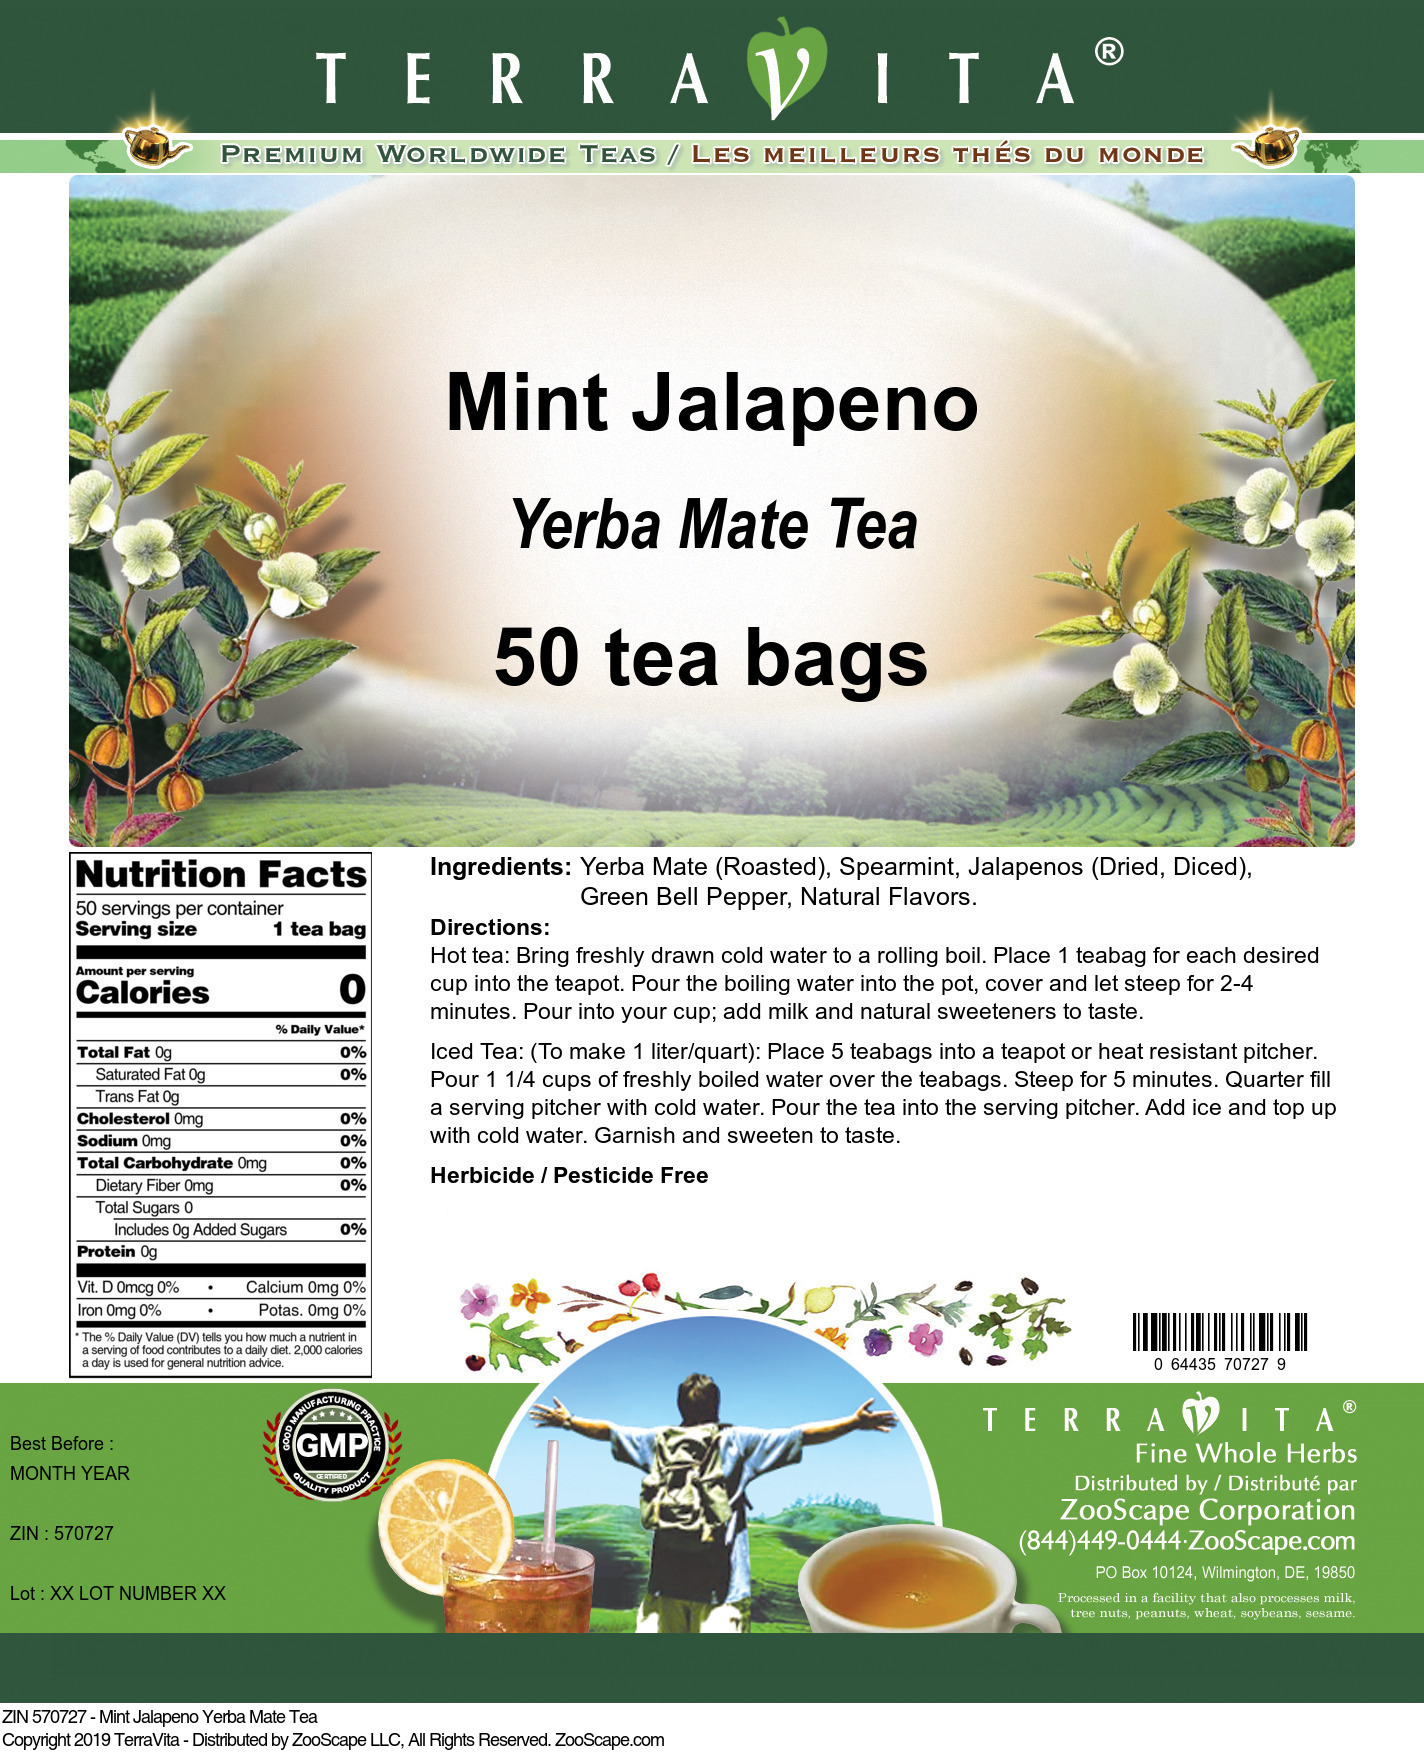 Mint Jalapeno Yerba Mate Tea - Label